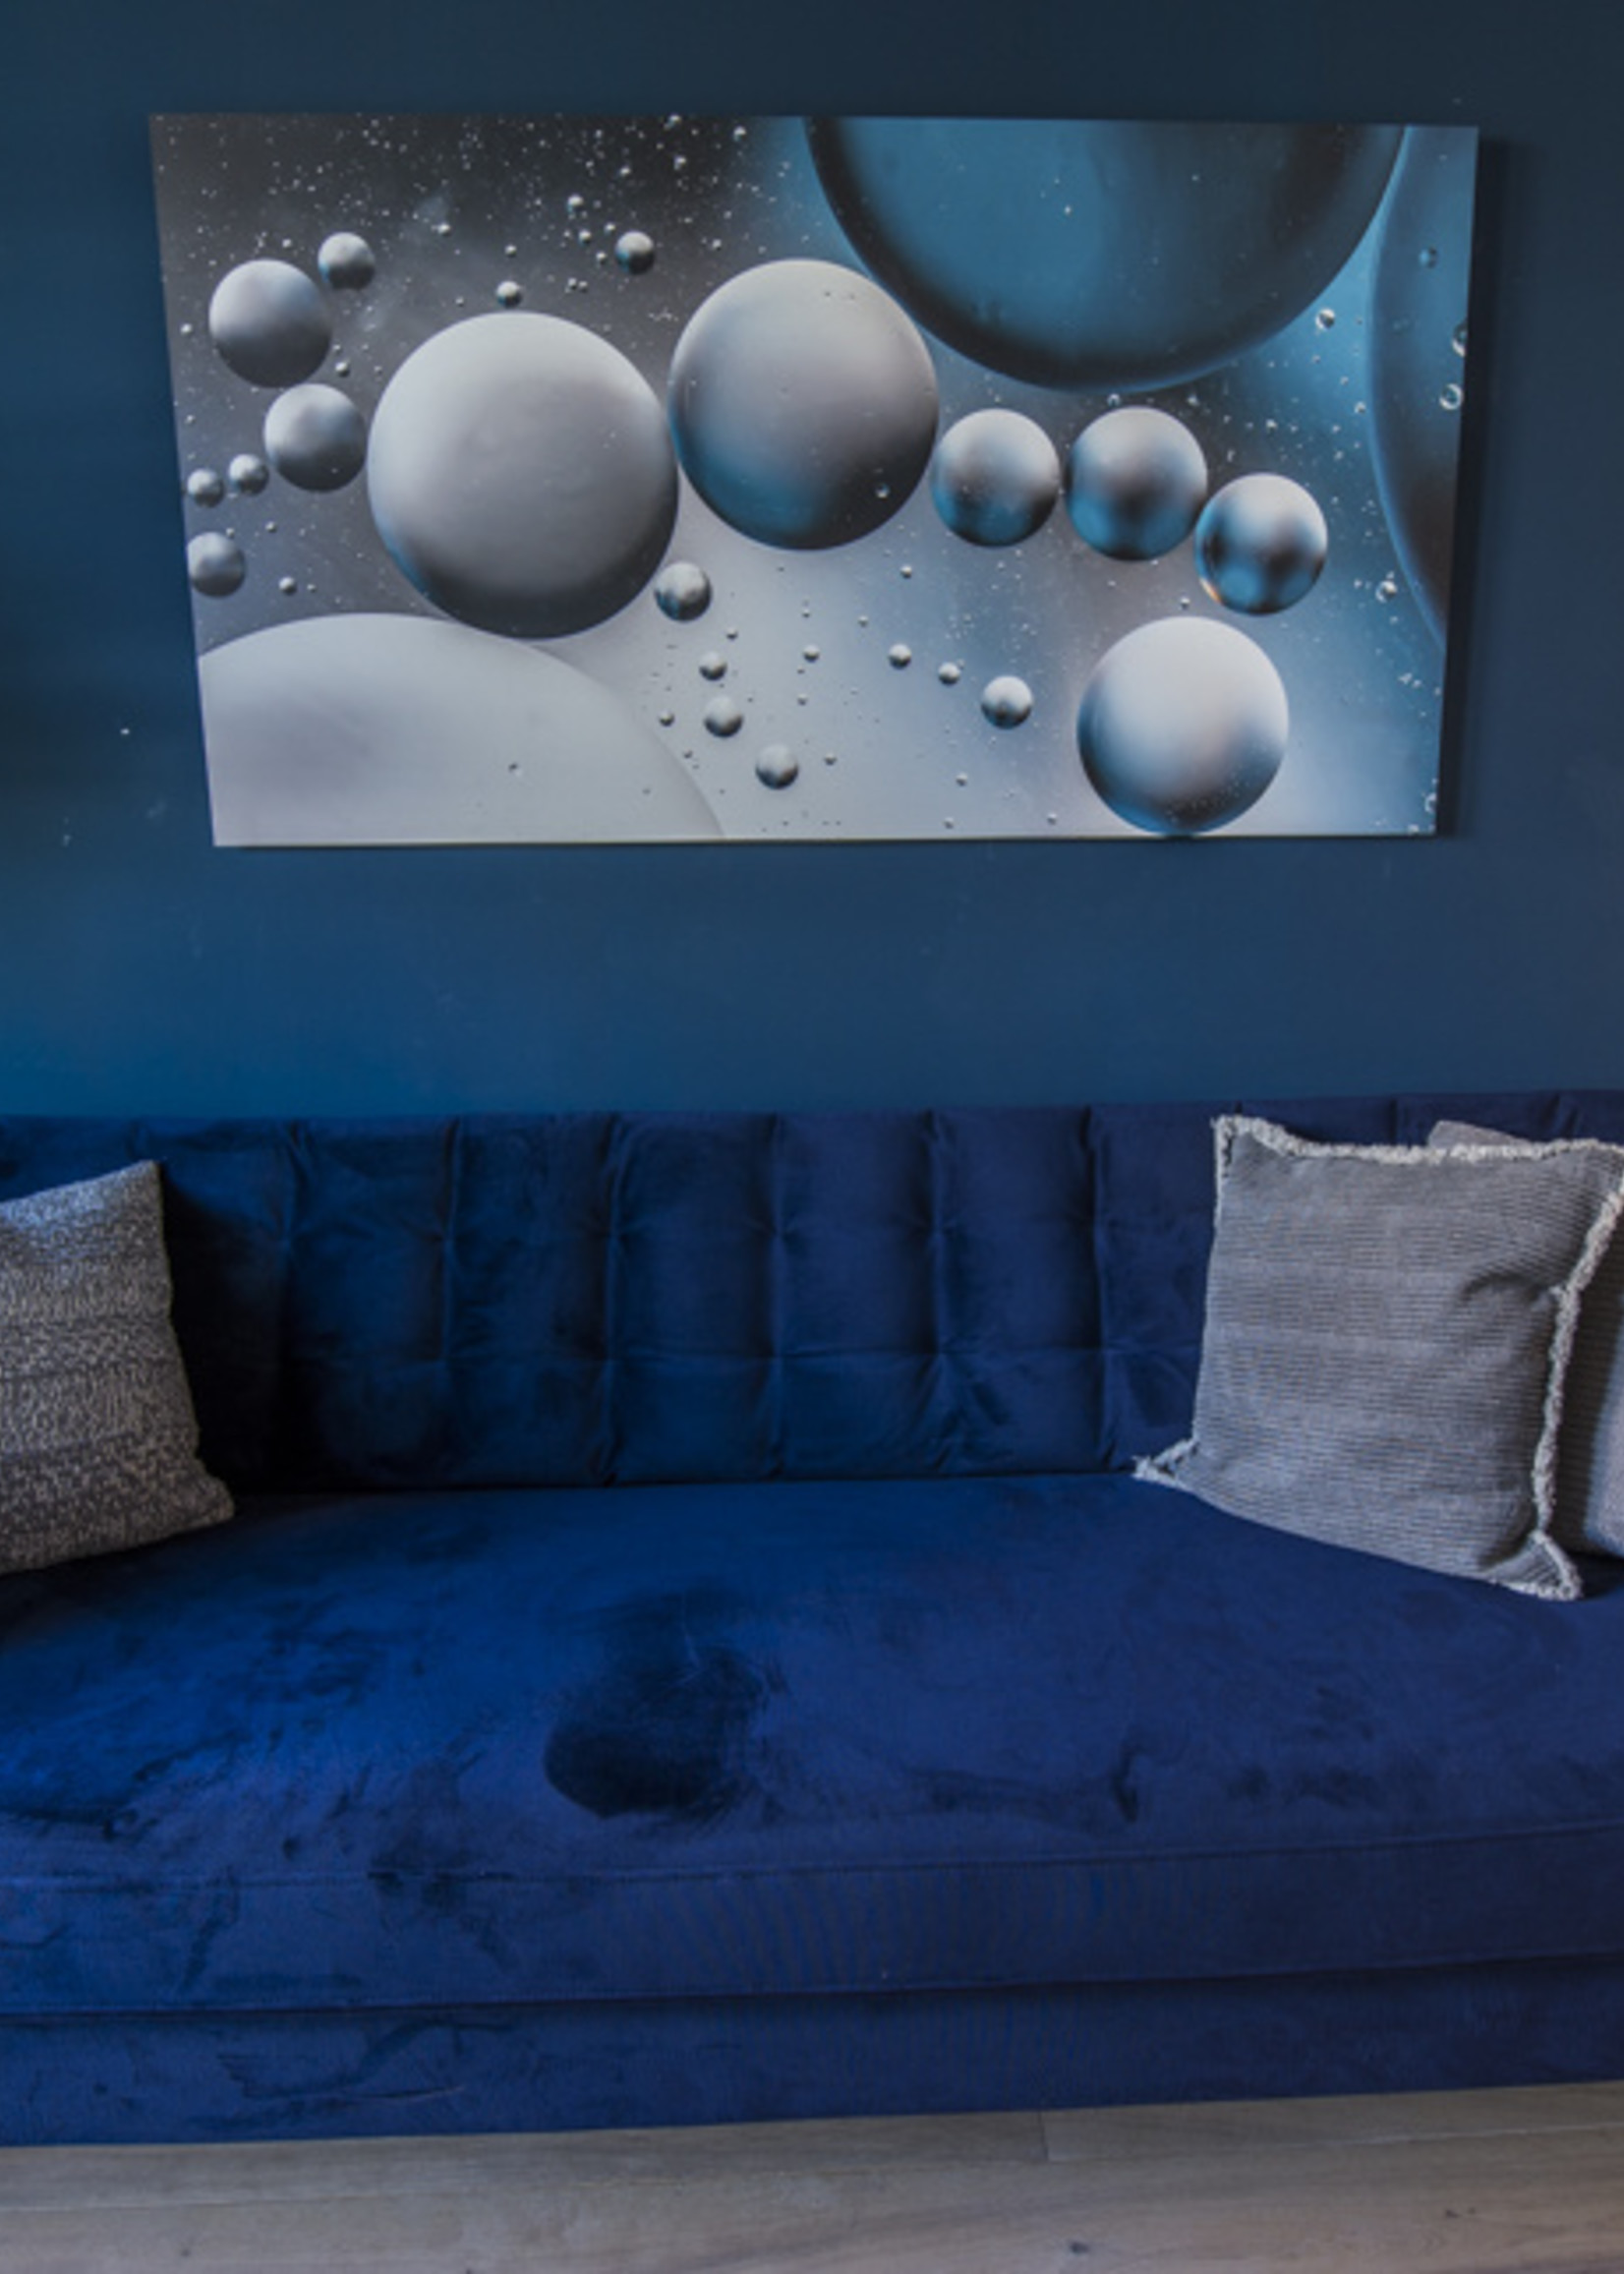 Frans van Steijn Wall photo "Bubble Art # 2" Aluminum on Dibond 120 cm